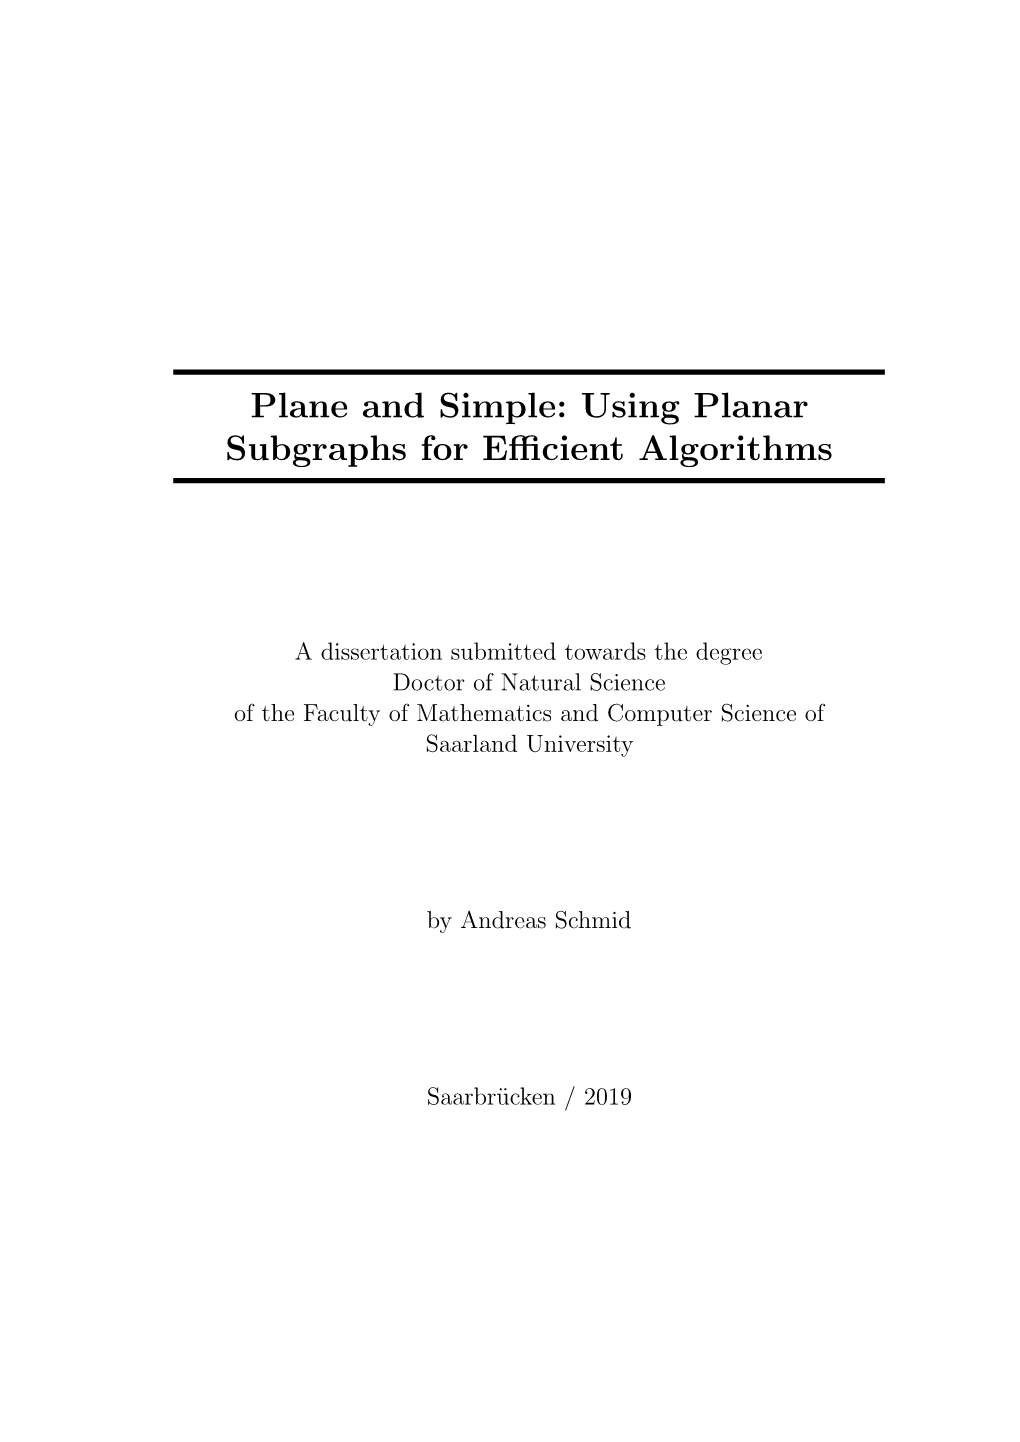 Plane and Simple: Using Planar Subgraphs for Efficient Algorithms